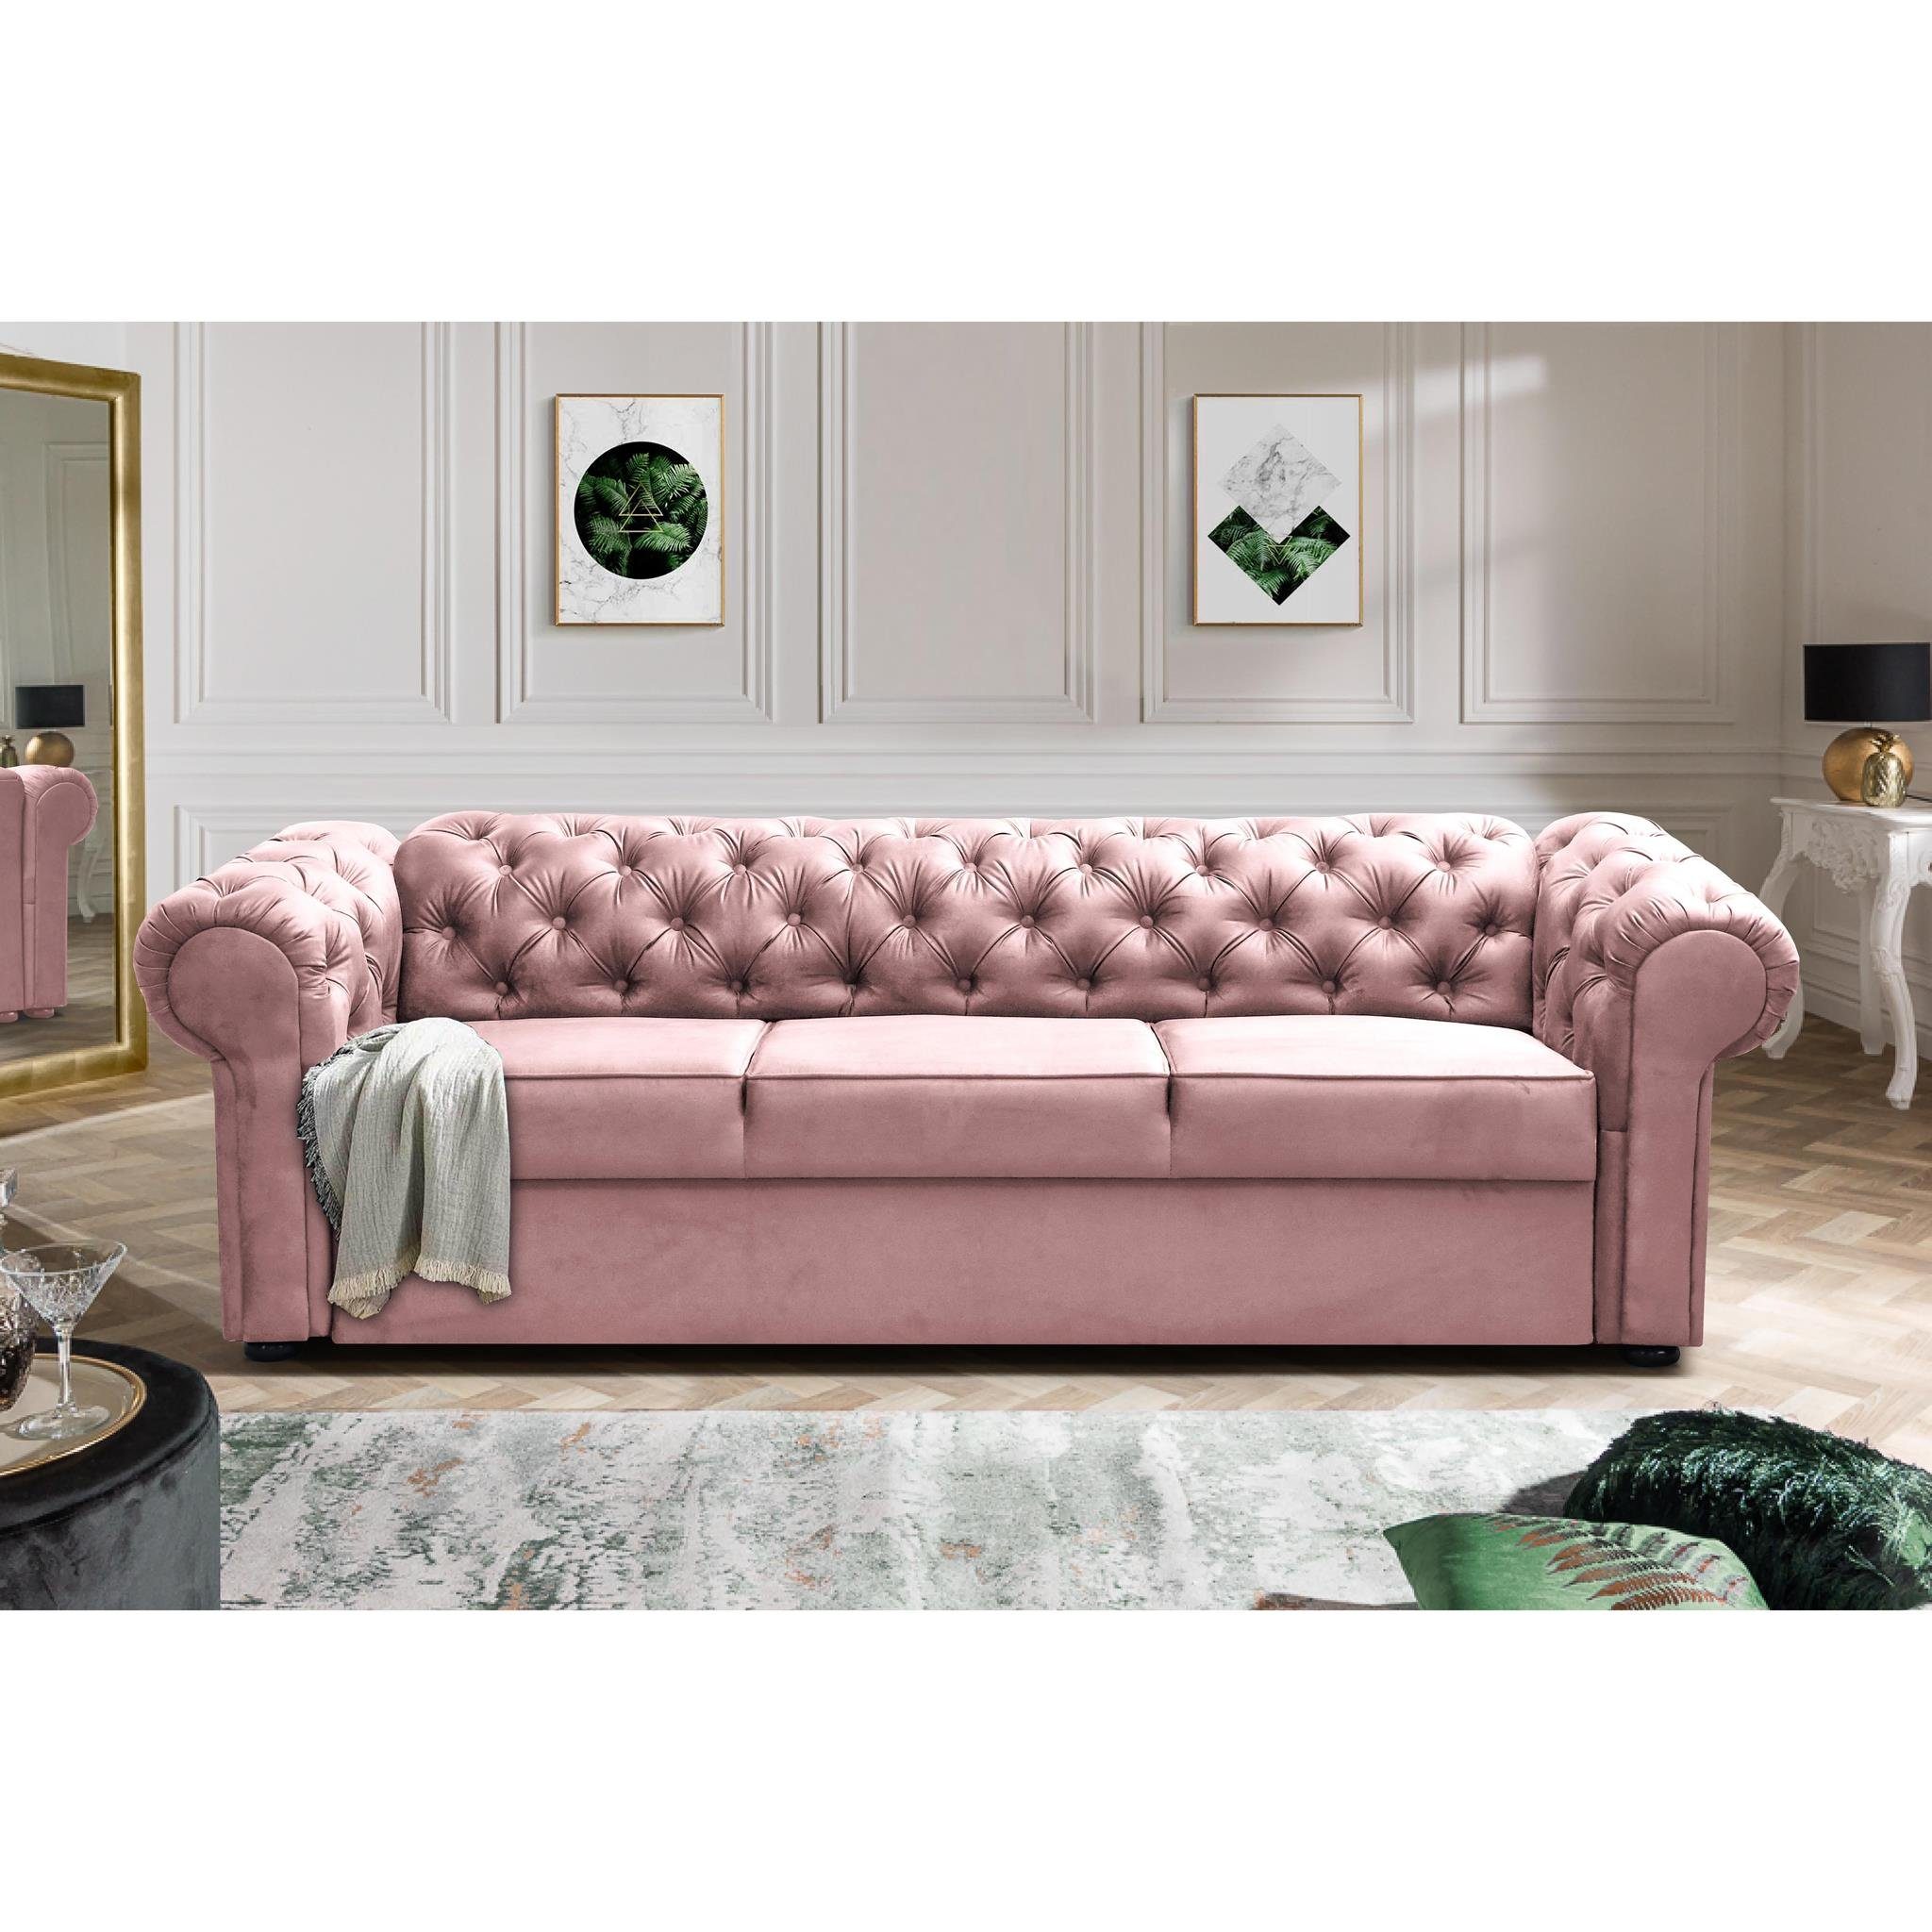 Beautysofa 3-Sitzer Chester, Sofa mit Steppung, Dreisitzer Sofa aus Velours, mit Relaxfunktion Puderrosa (kronos 27)